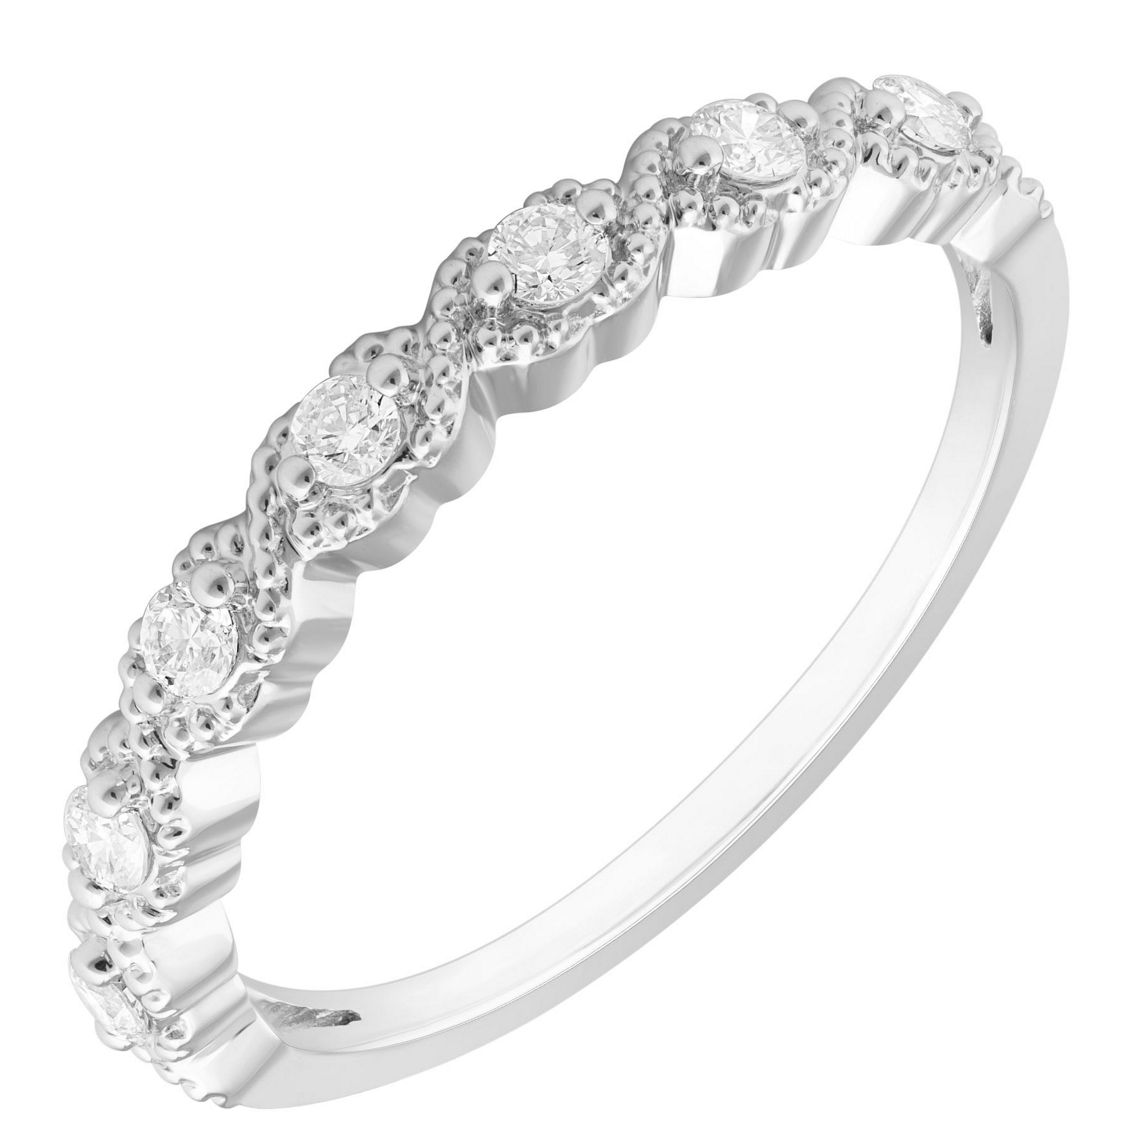 APMG 14K White Gold 1/5 CTW Diamond Twine Ring - Image 2 of 4